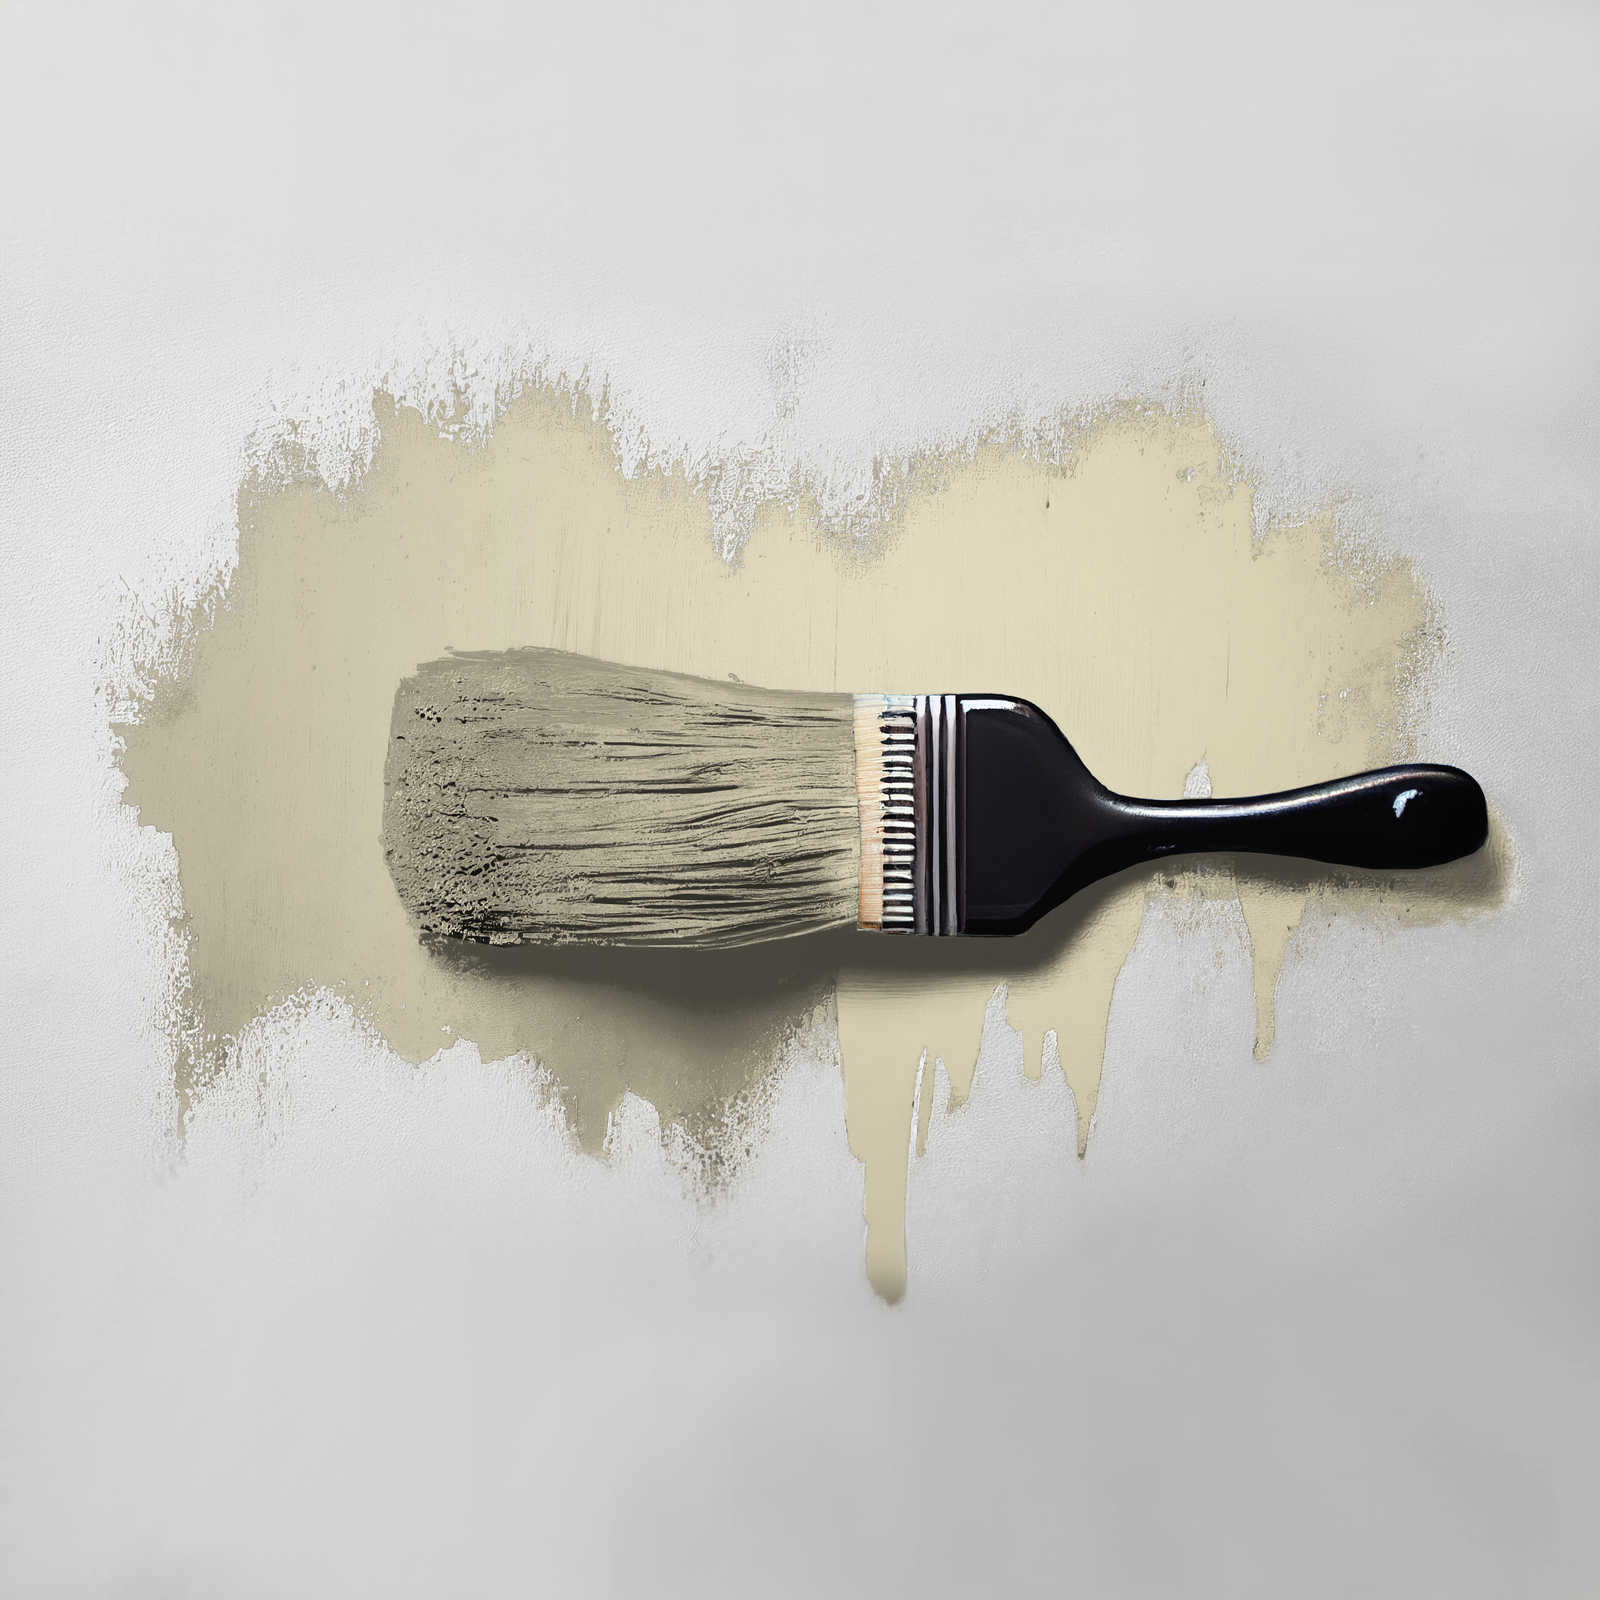             Pintura mural TCK4000 »Natural Mate« en beige claro verdoso – 2,5 litro
        